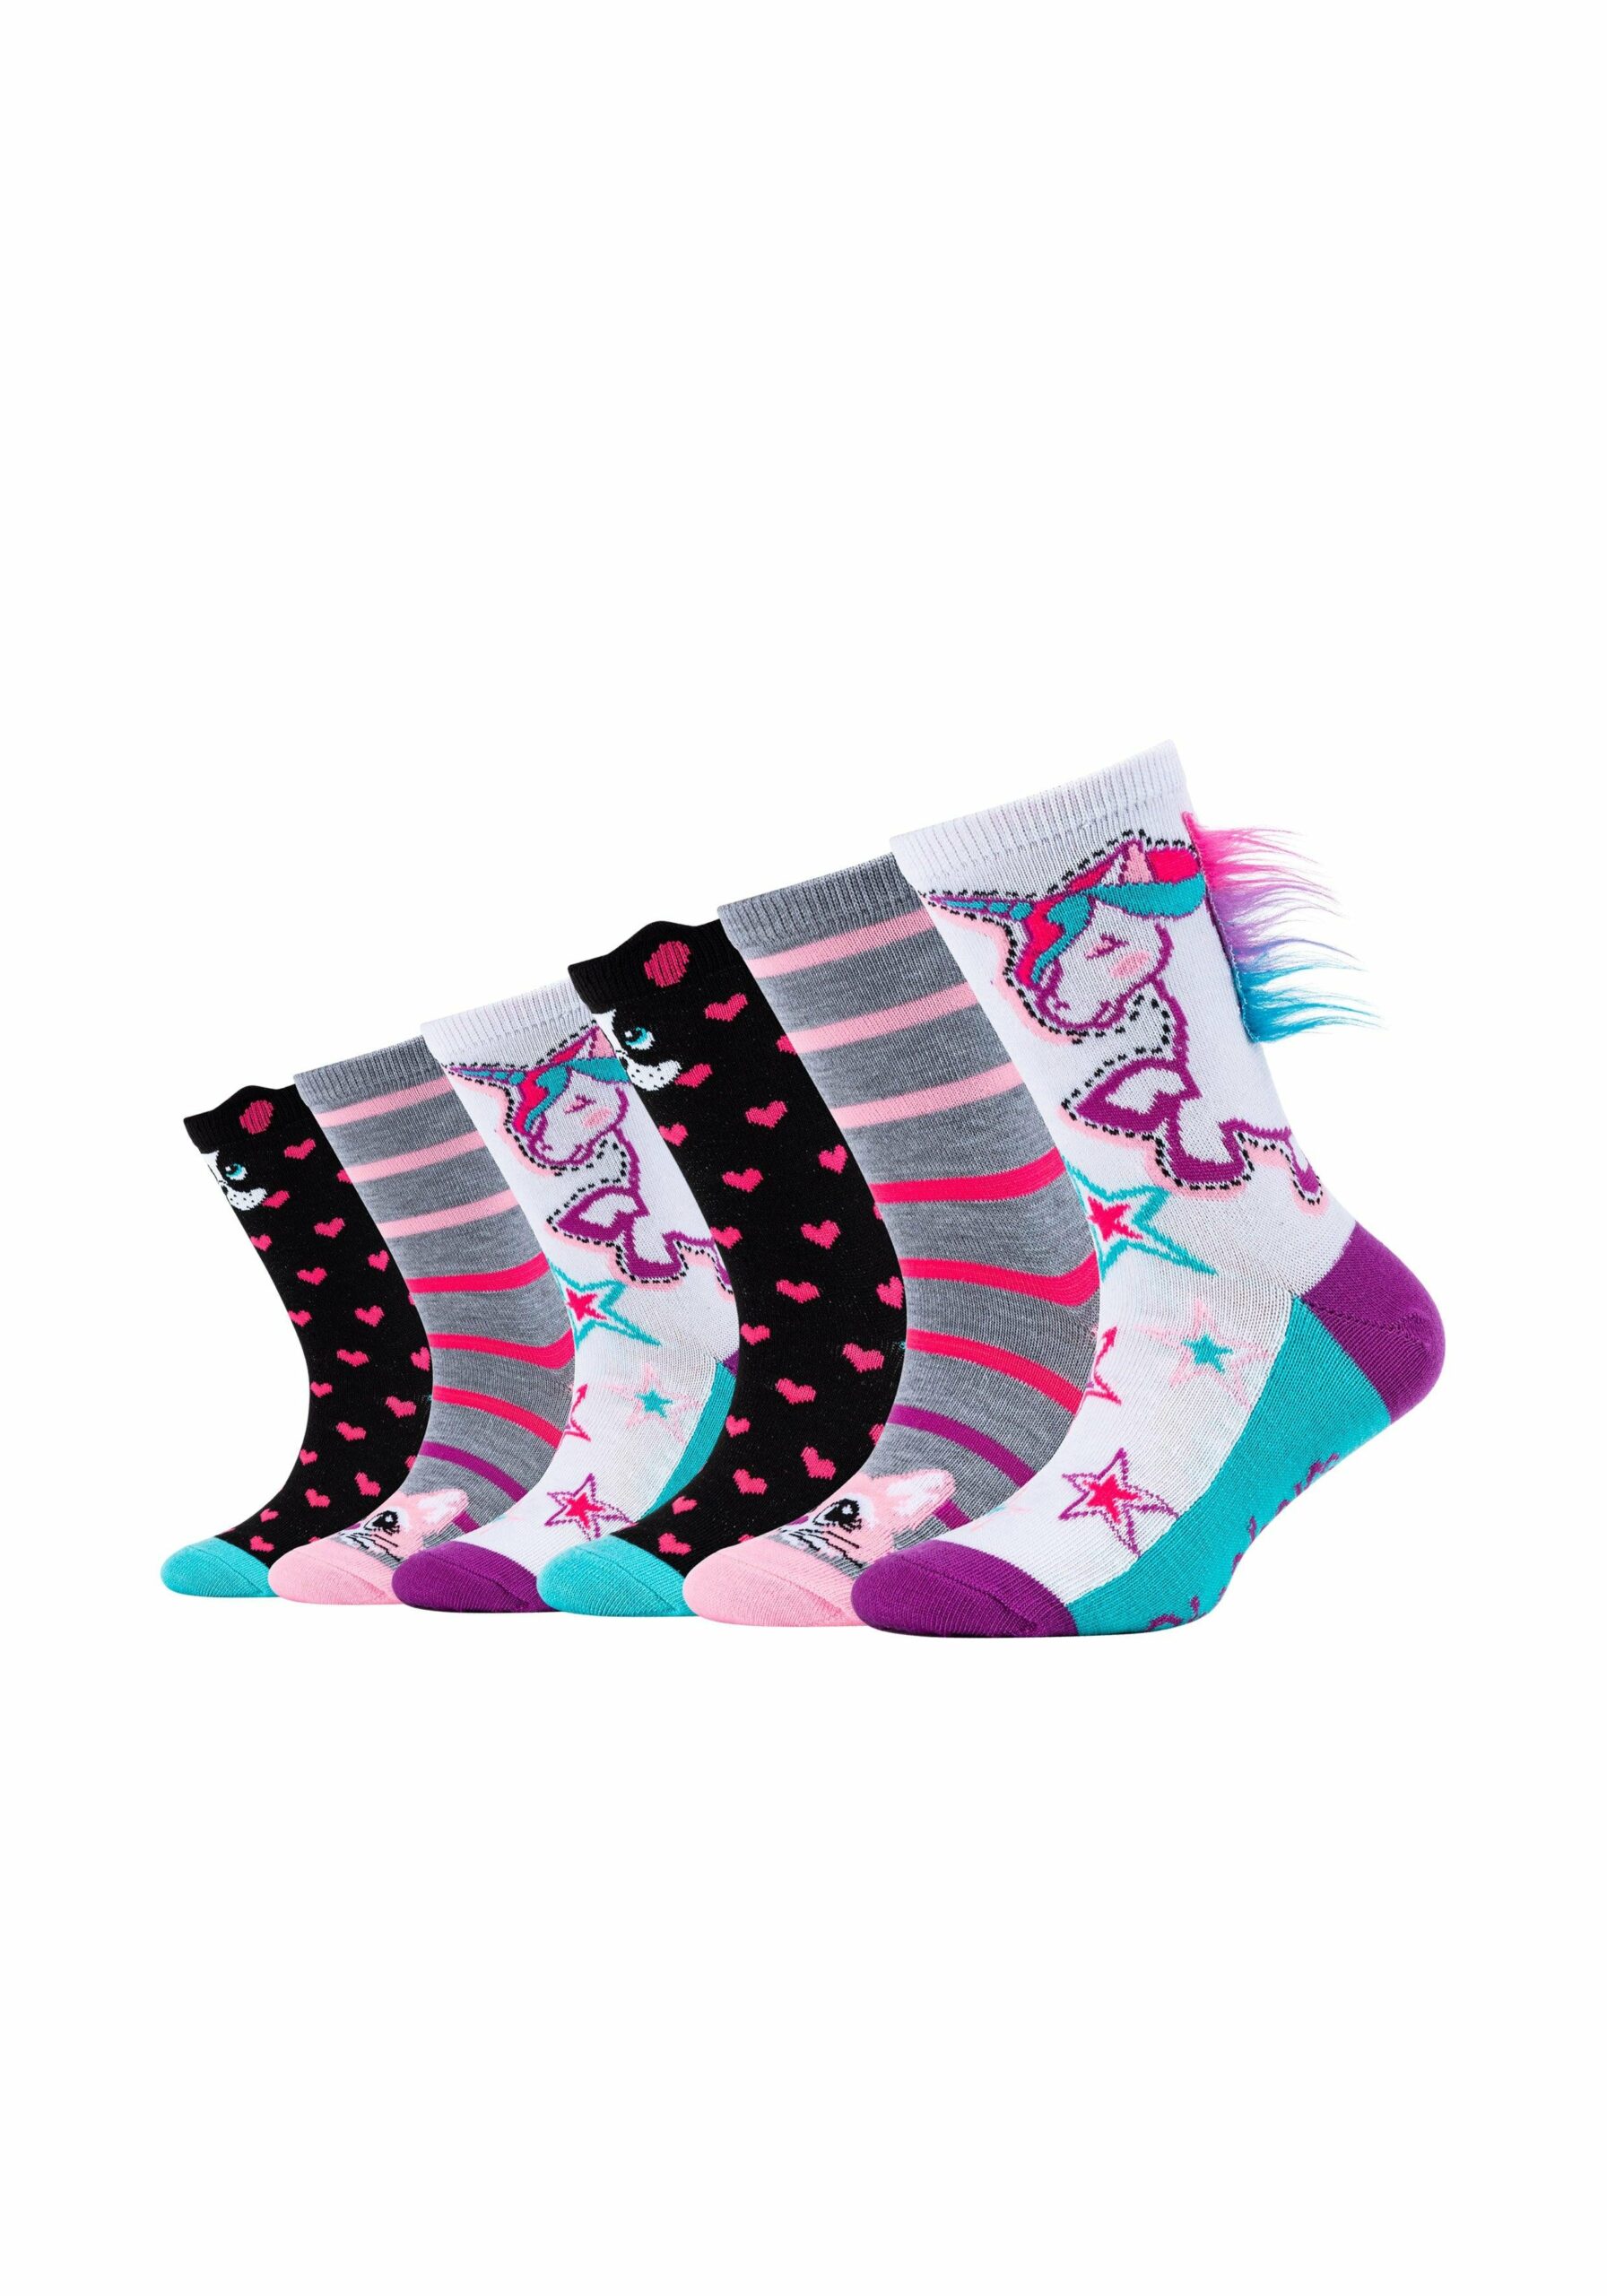 Skechers Kinder-Socken 6er bei white kaufen Tier-Motiv Pack